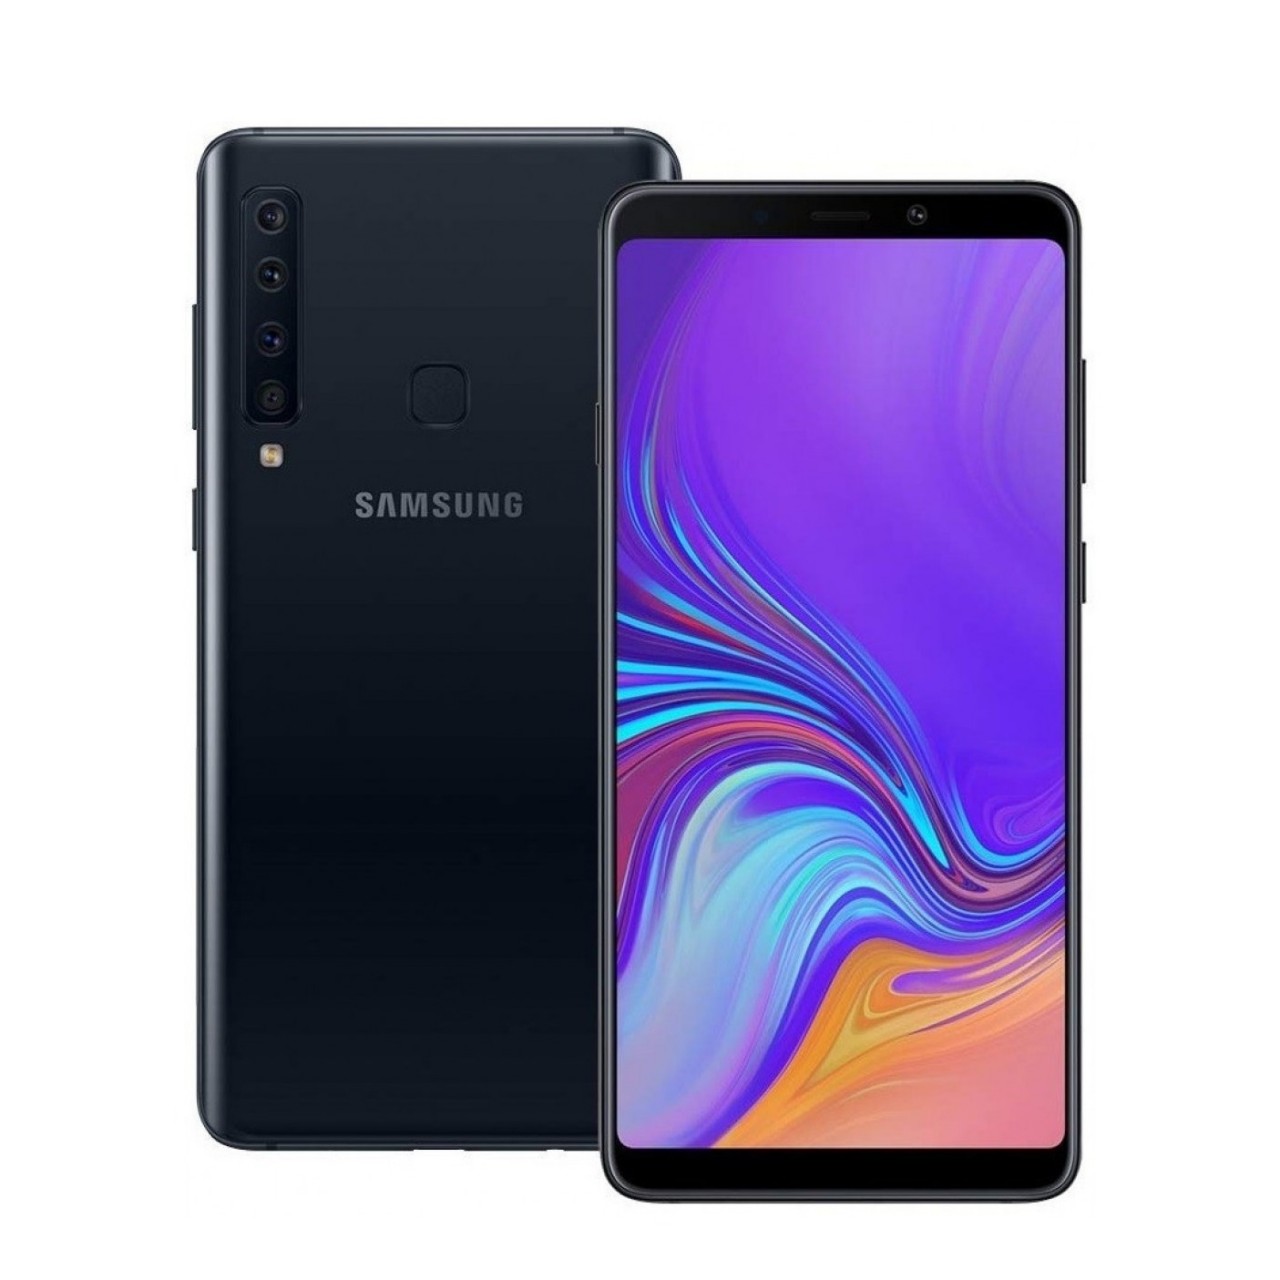 Samsung A9 2018 A920 – Quad (4) Back Cameras 24+8+10+5 MP & 24 MP Front Camera - 6GB RAM - 128GB